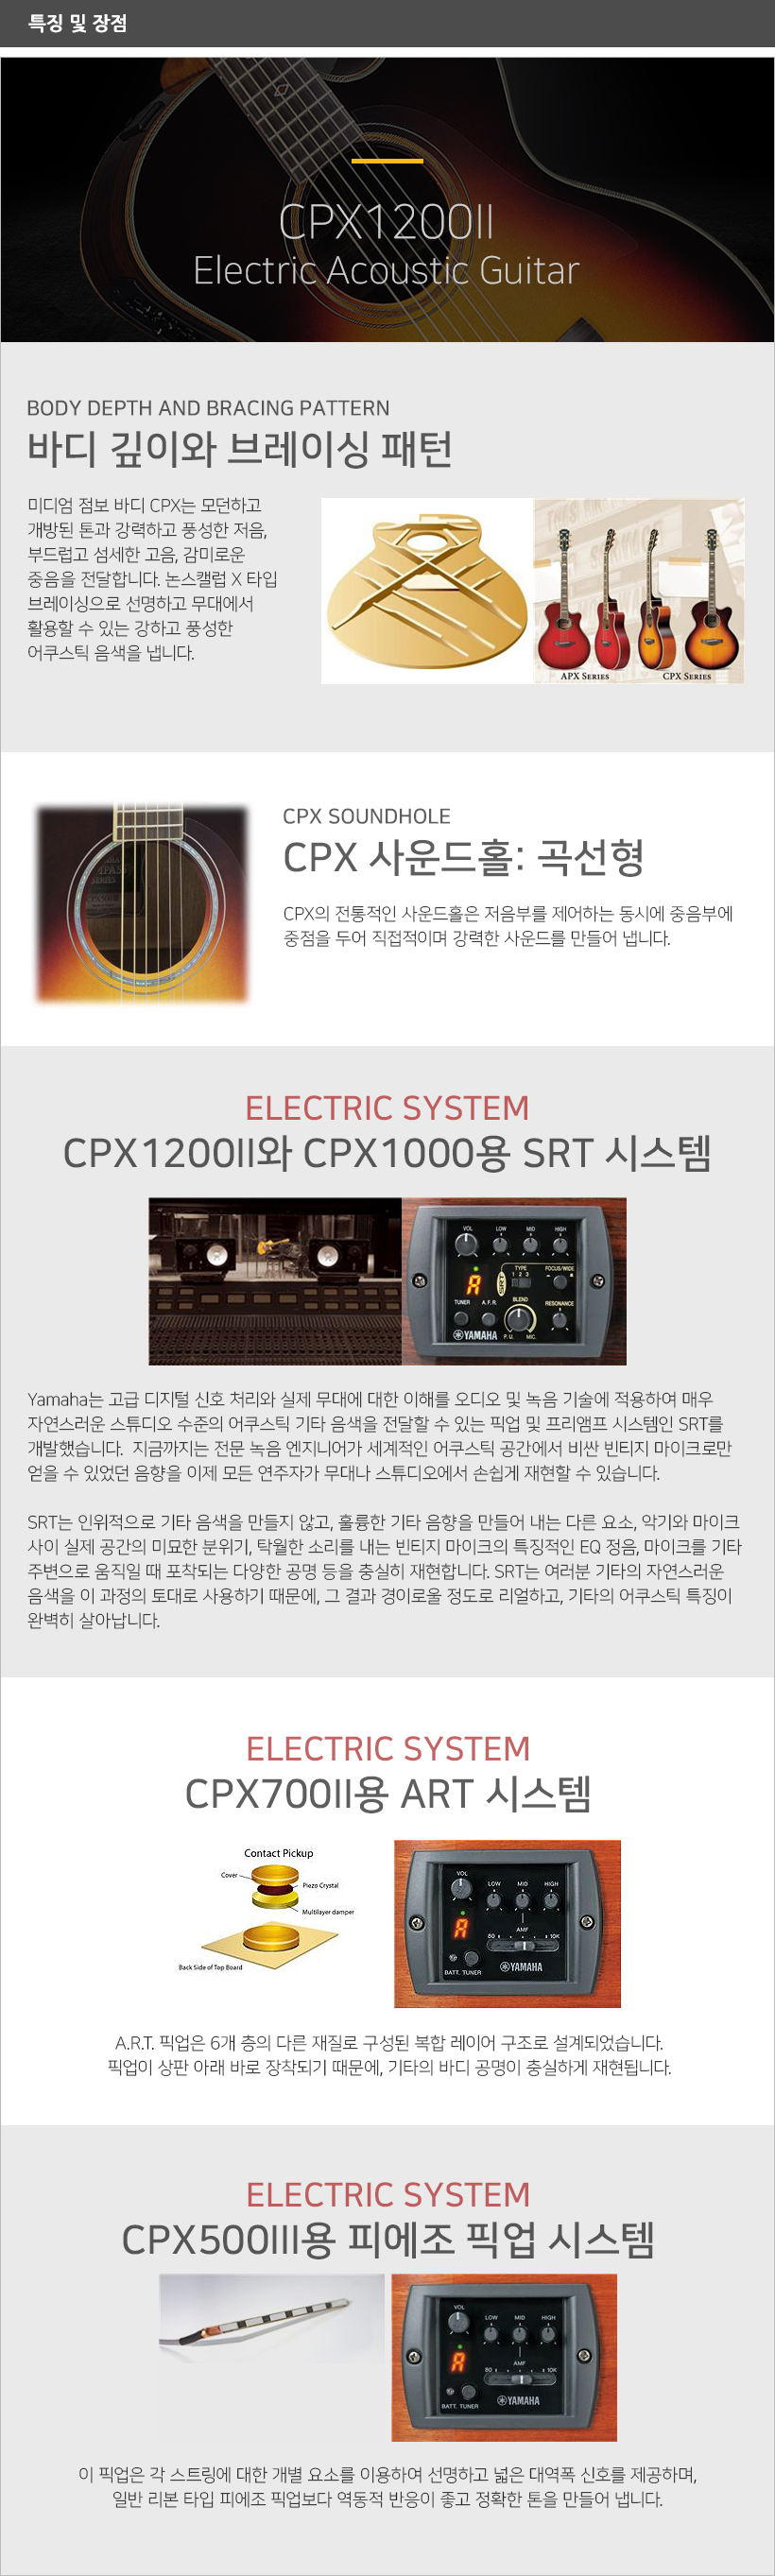 cpx1200-2 특징 및 장점